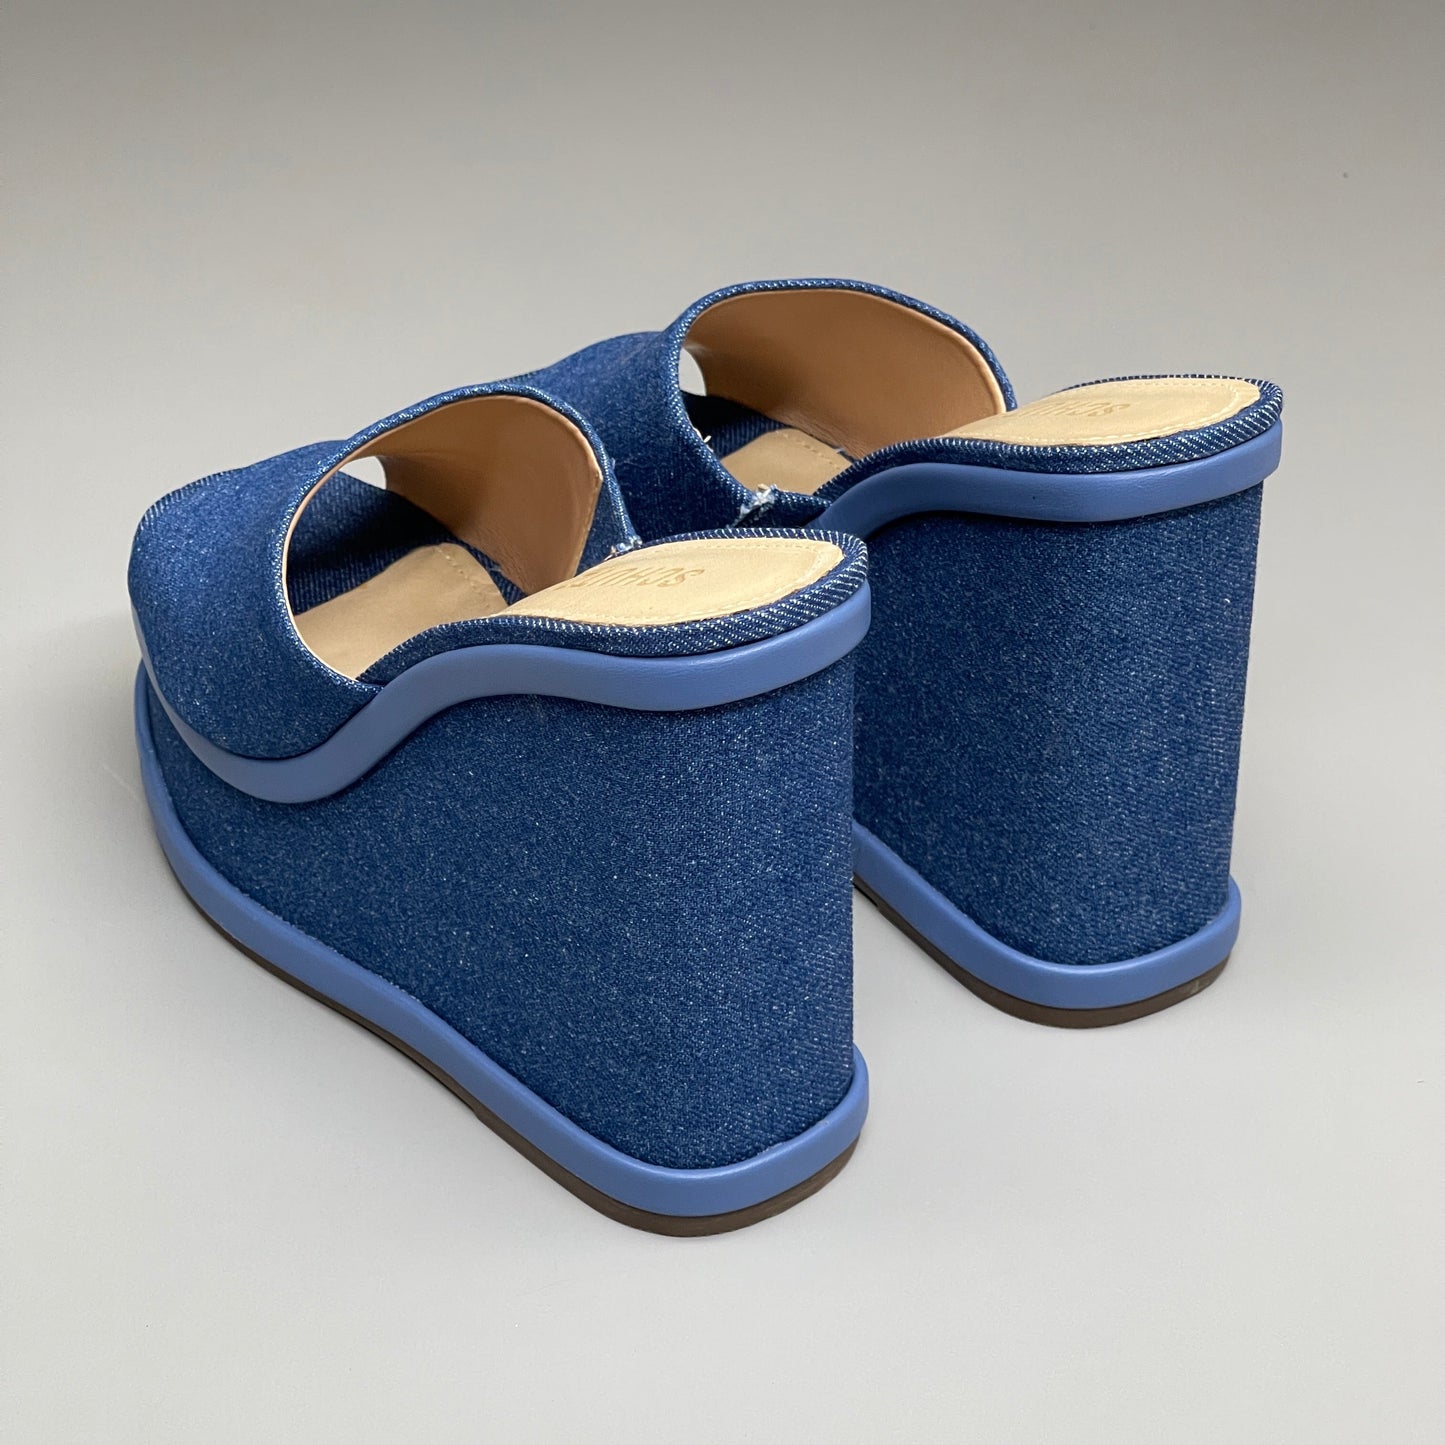 SCHUTZ Dalle Denim Women's Wedge Sandal Blue Platform Shoe Sz 9B (New)